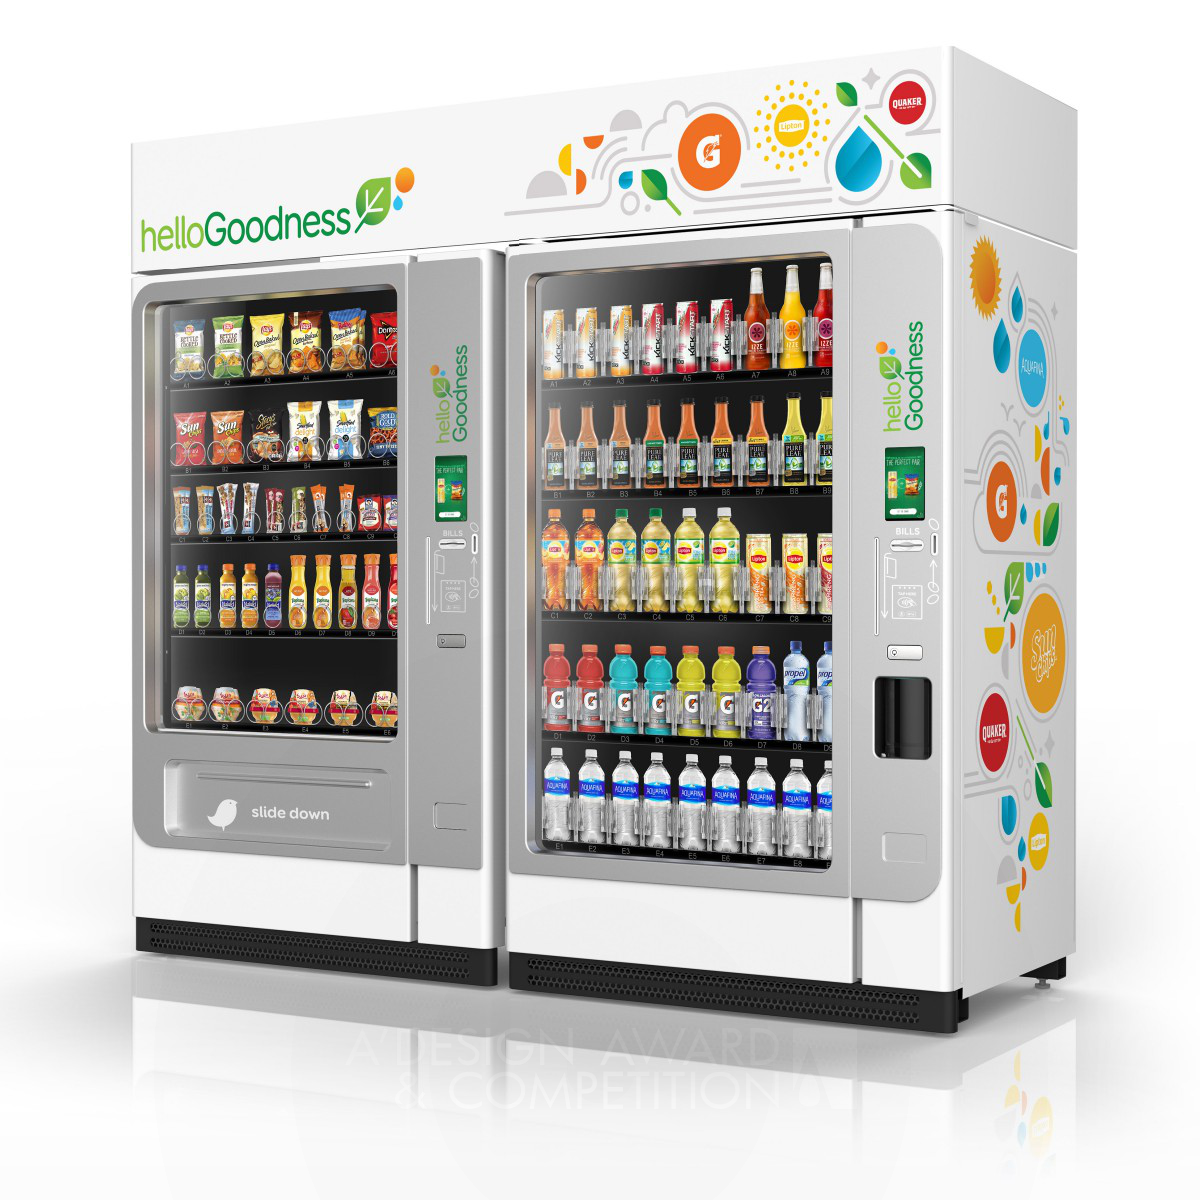 helloGoodness Vending Machine by PepsiCo Design & Innovation